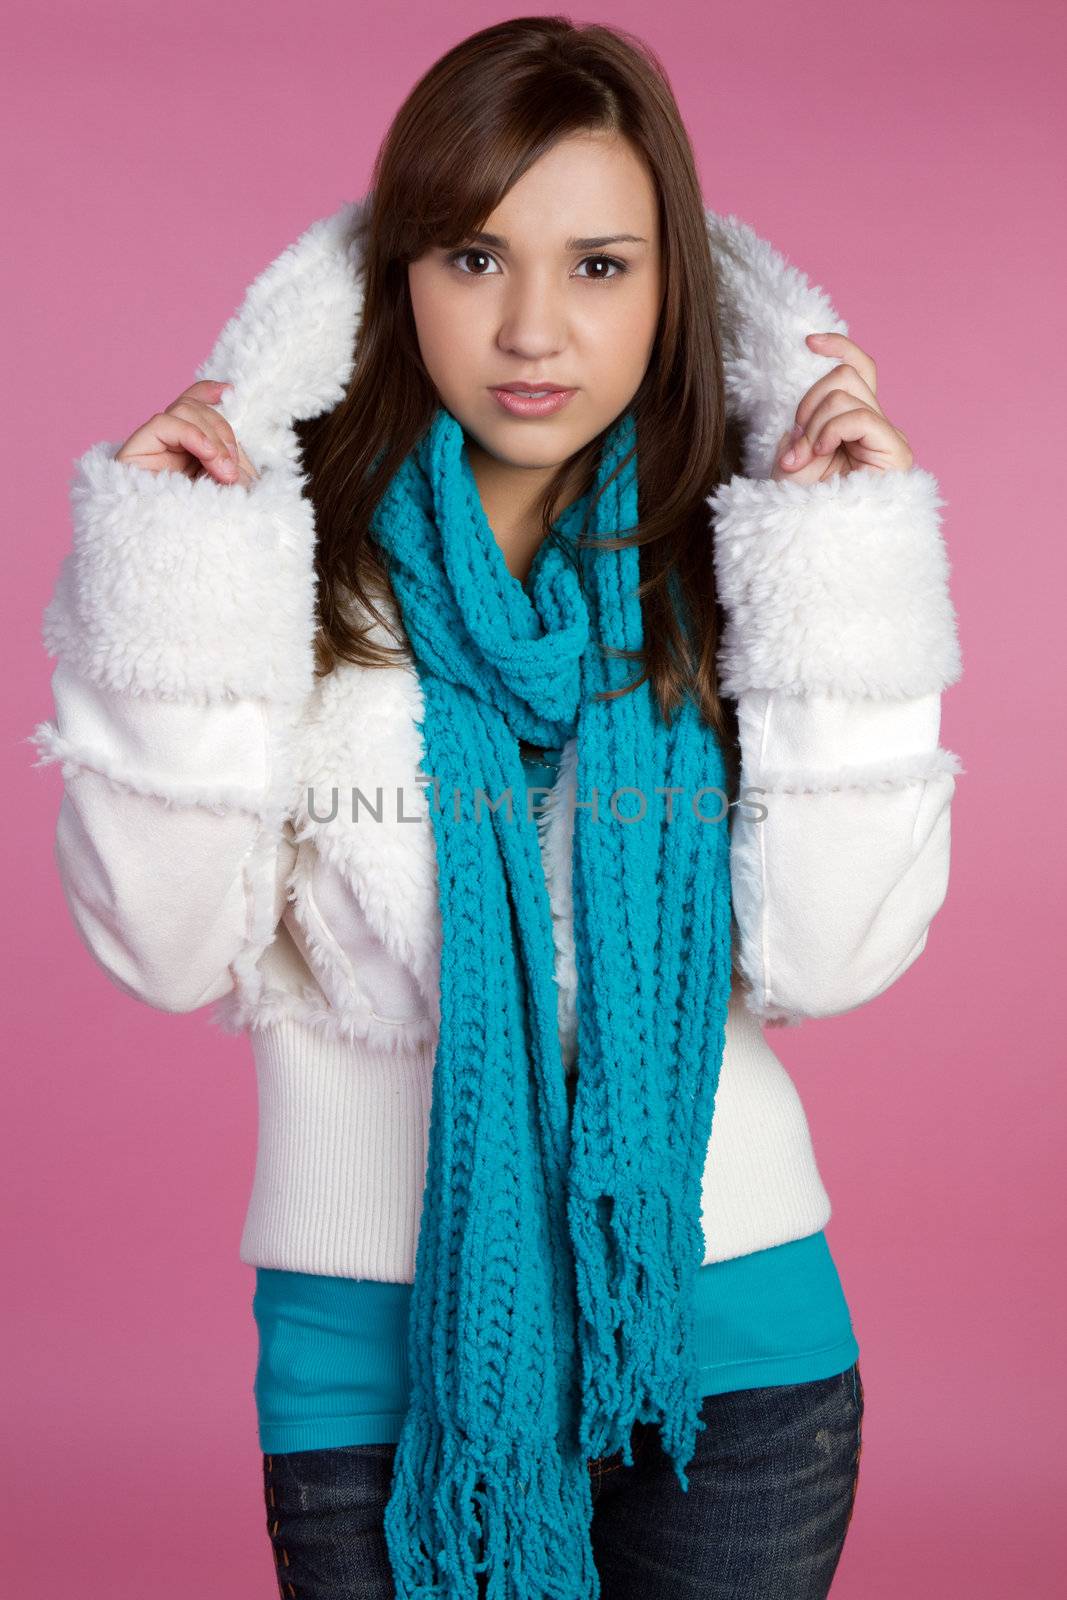 Winter Fashion Girl by keeweeboy